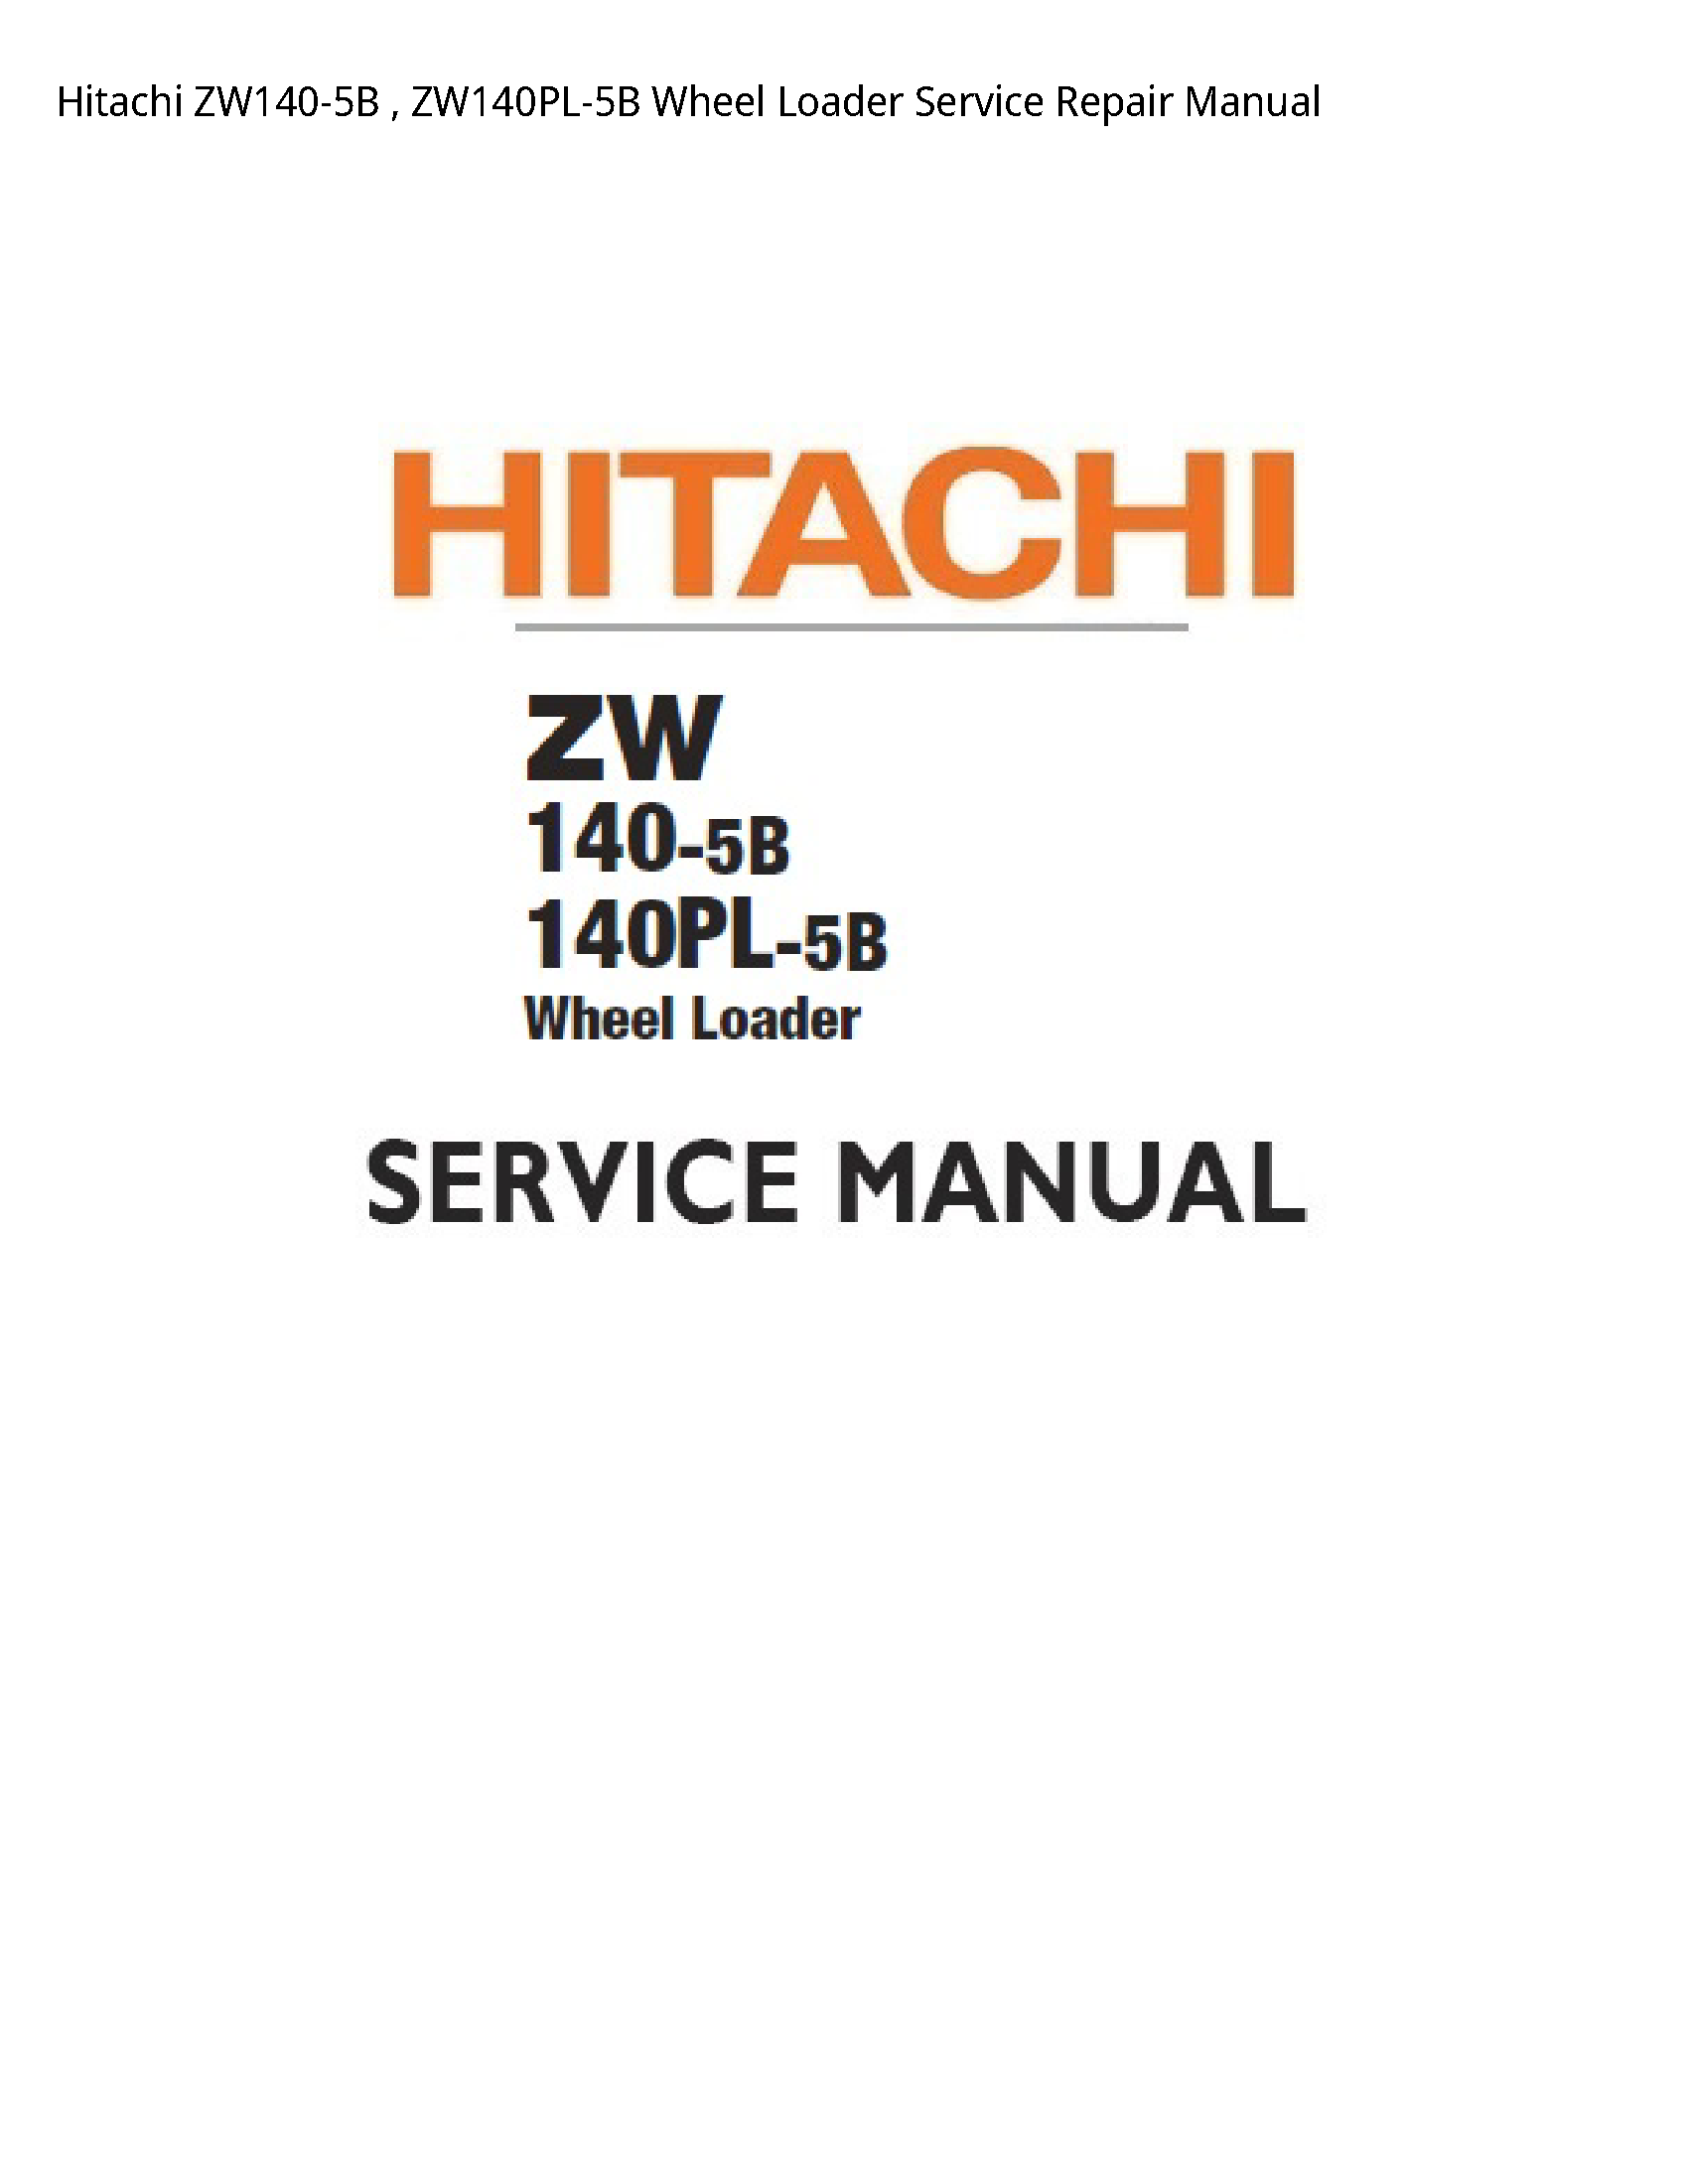 Hitachi ZW140-5B Wheel Loader manual